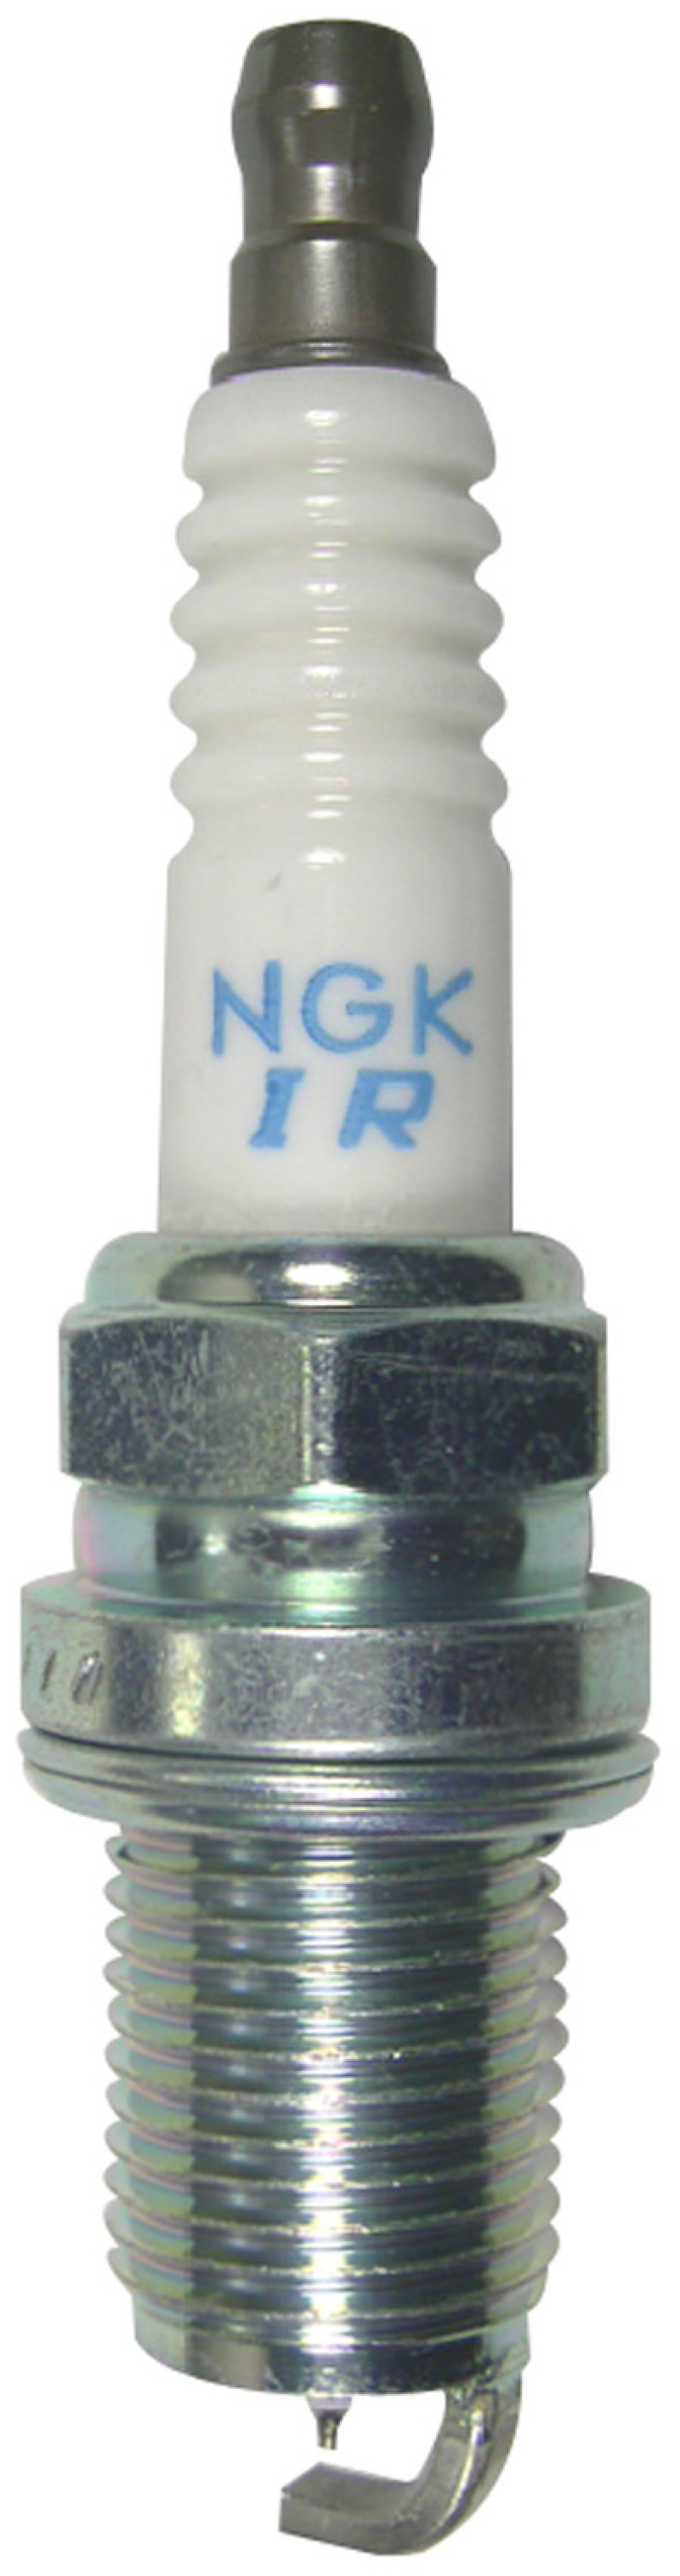 NGK Laser Iridium Spark Plug Box of 4 (IFR6L11) - 3678